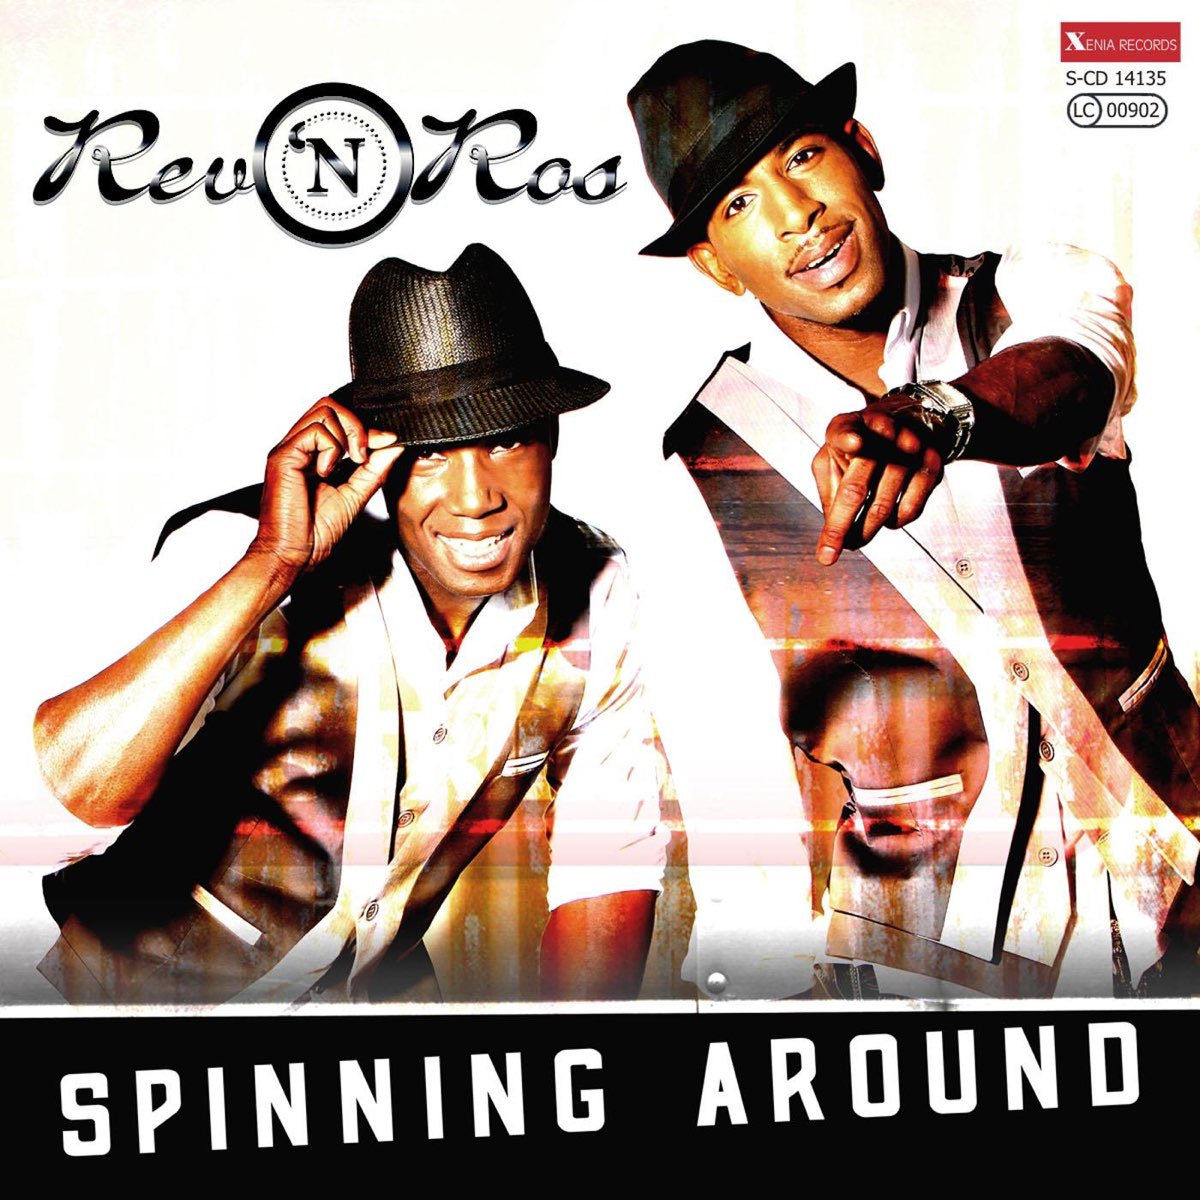 Spin музыка. Spinning around. Rev'n'. Kero Spin around. Перевод песни Spin around.